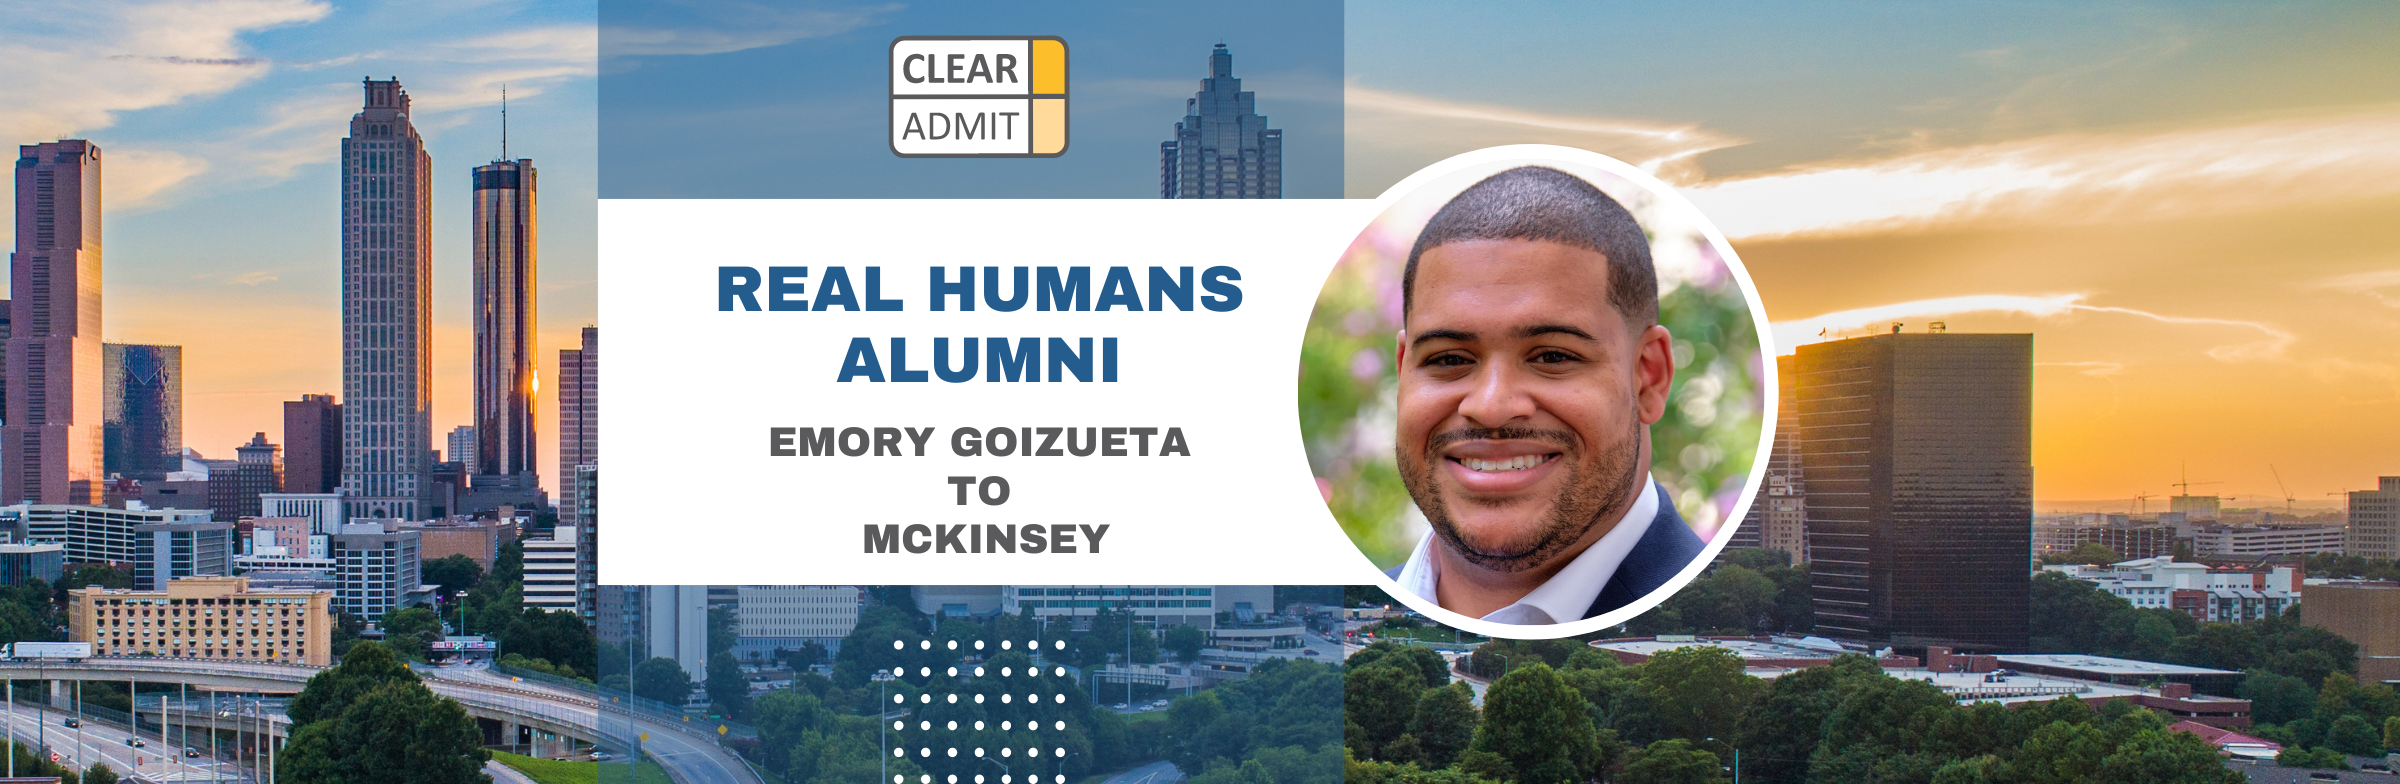 Image for Real Humans of McKinsey: Ryan Murray, Emory Goizueta MBA ’23, Associate